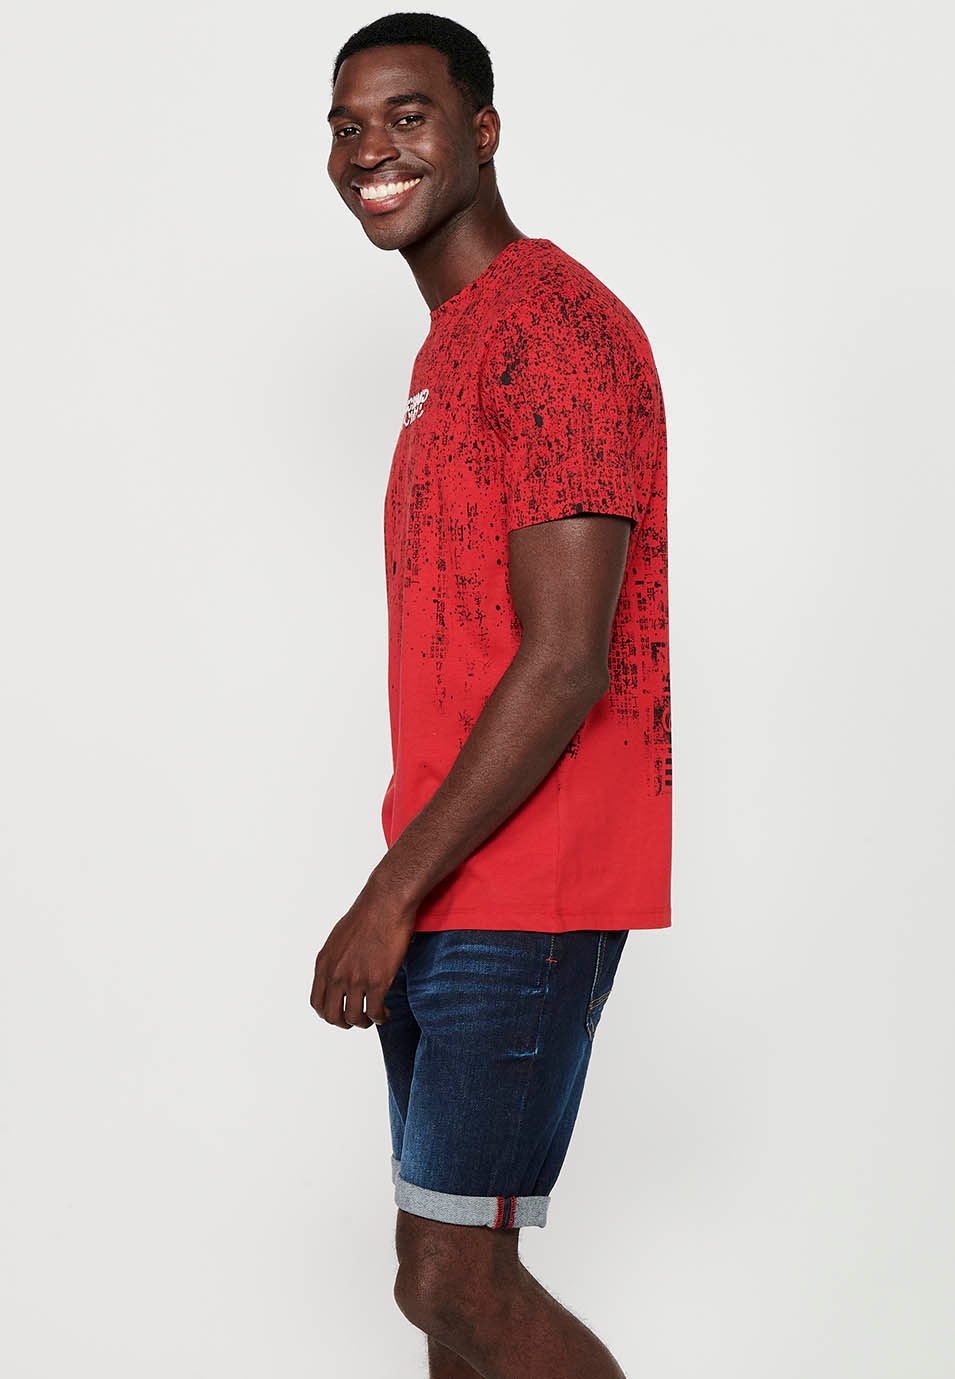 Camiseta de manga corta de algodón, color rojo para hombre